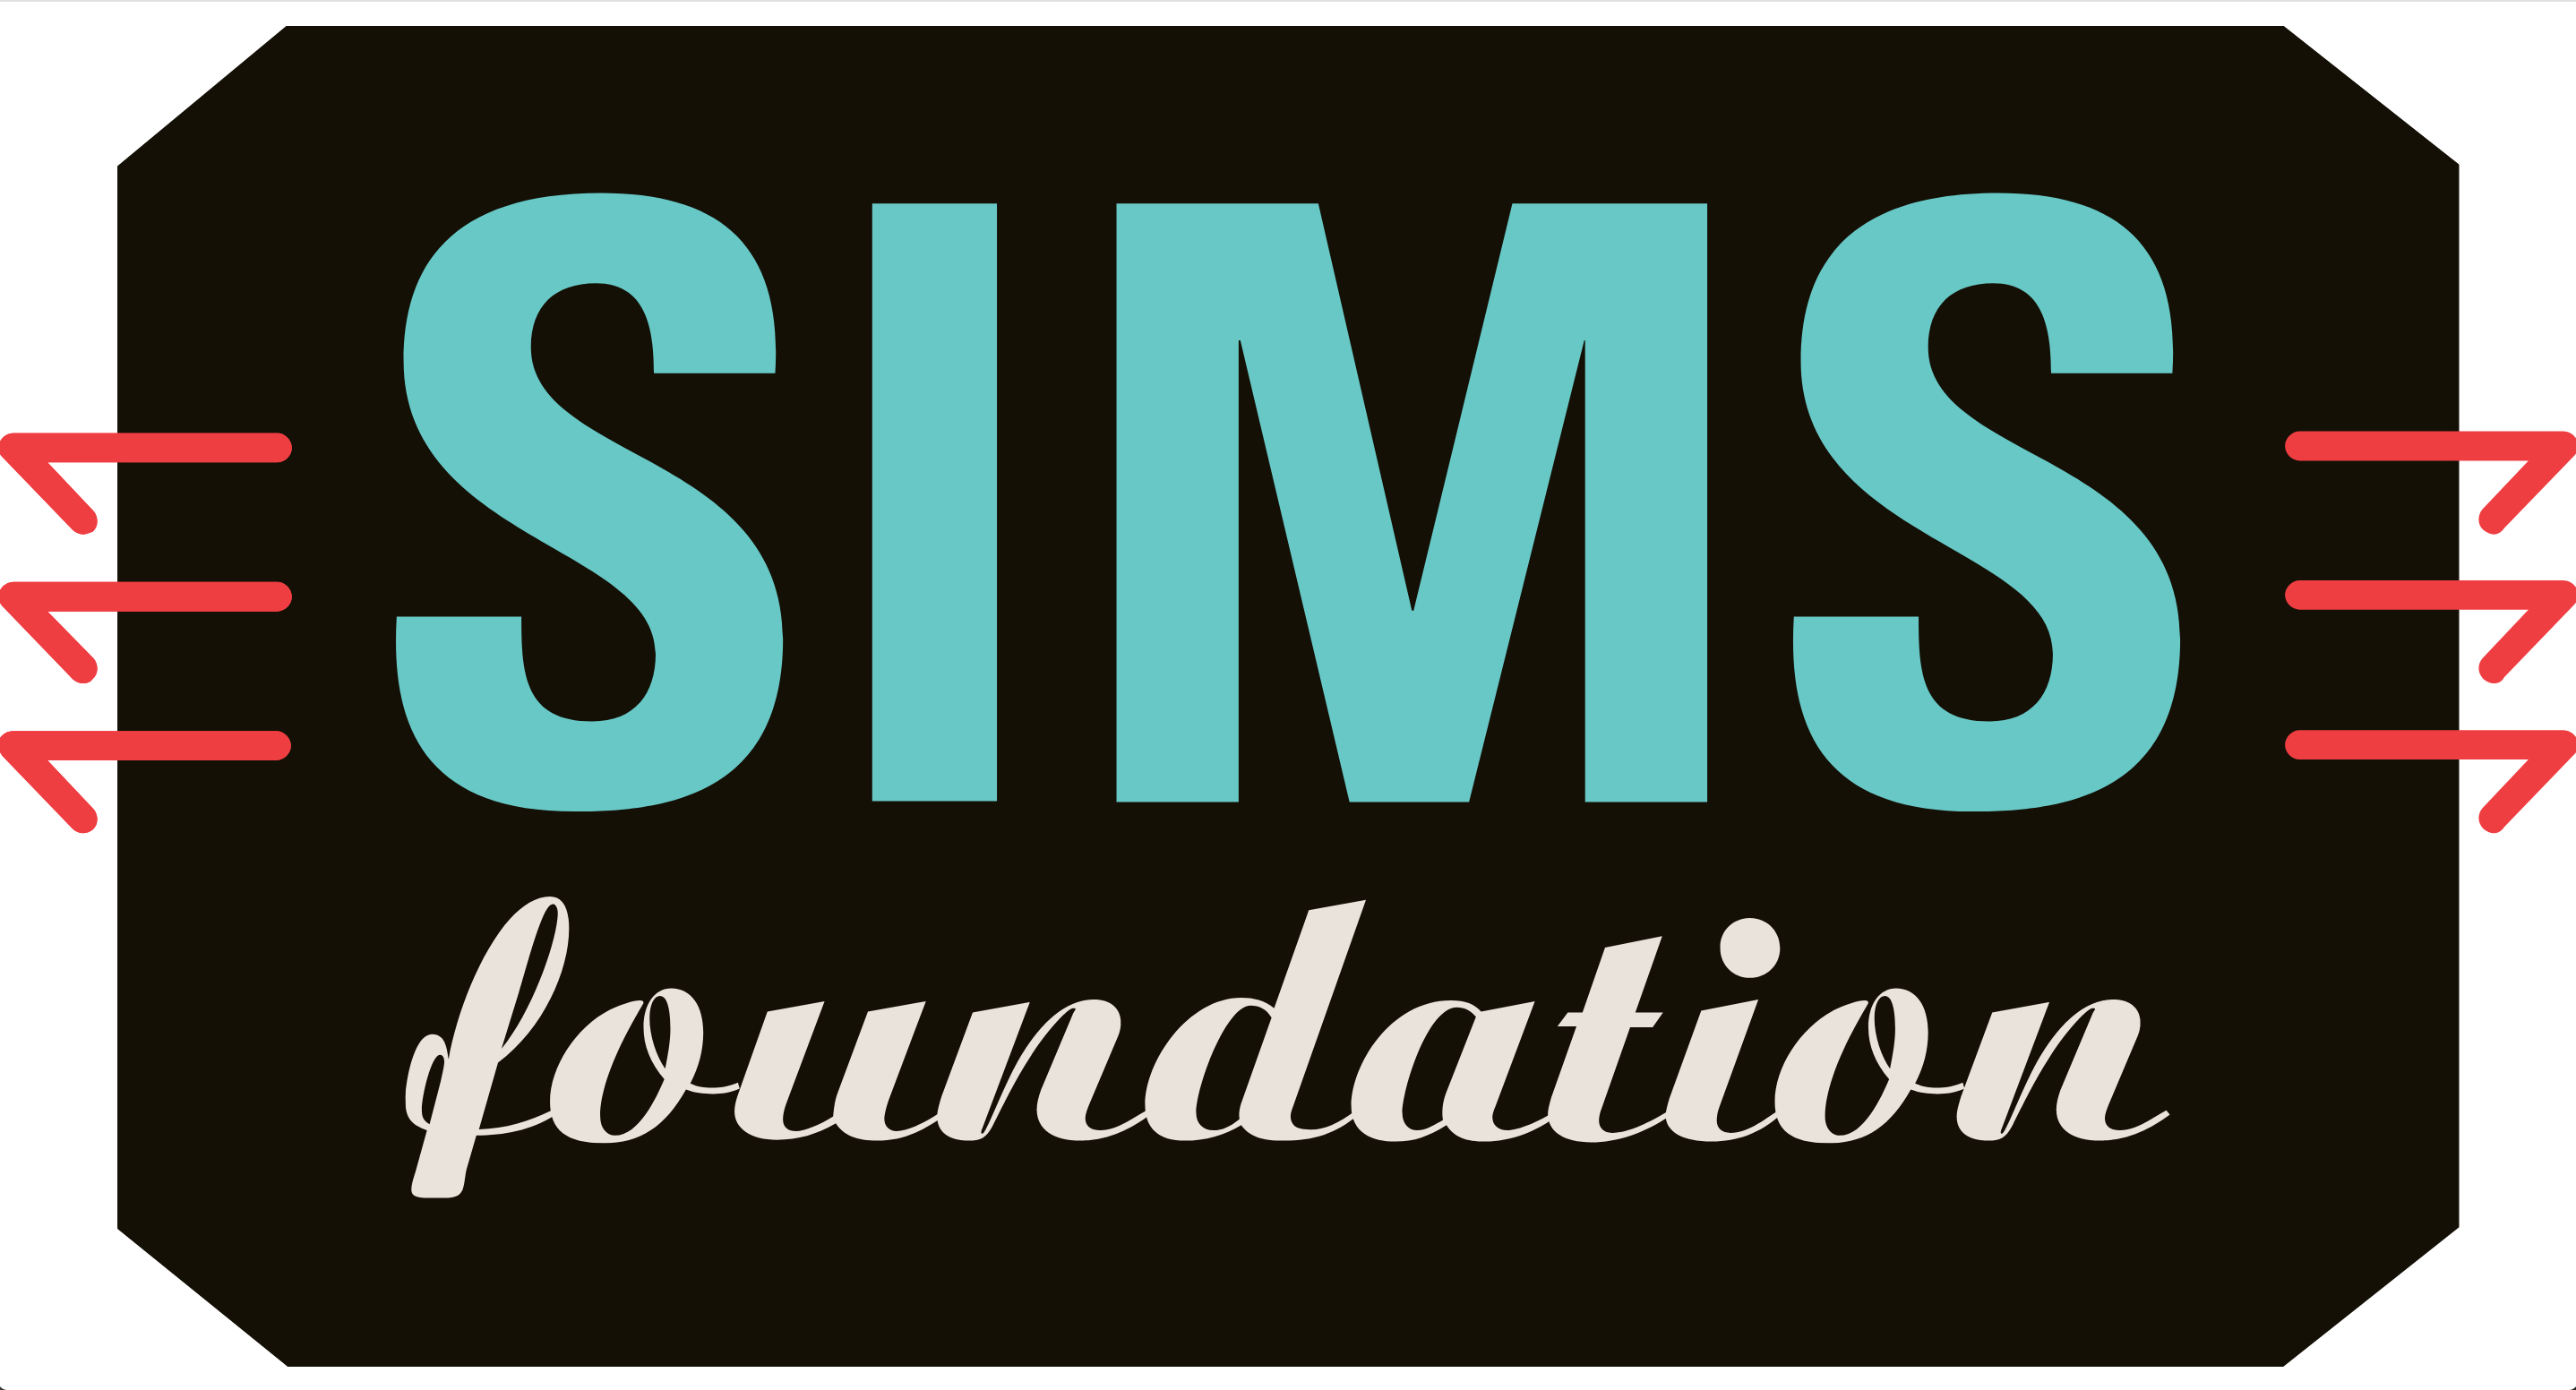 SIMS Foundation logo